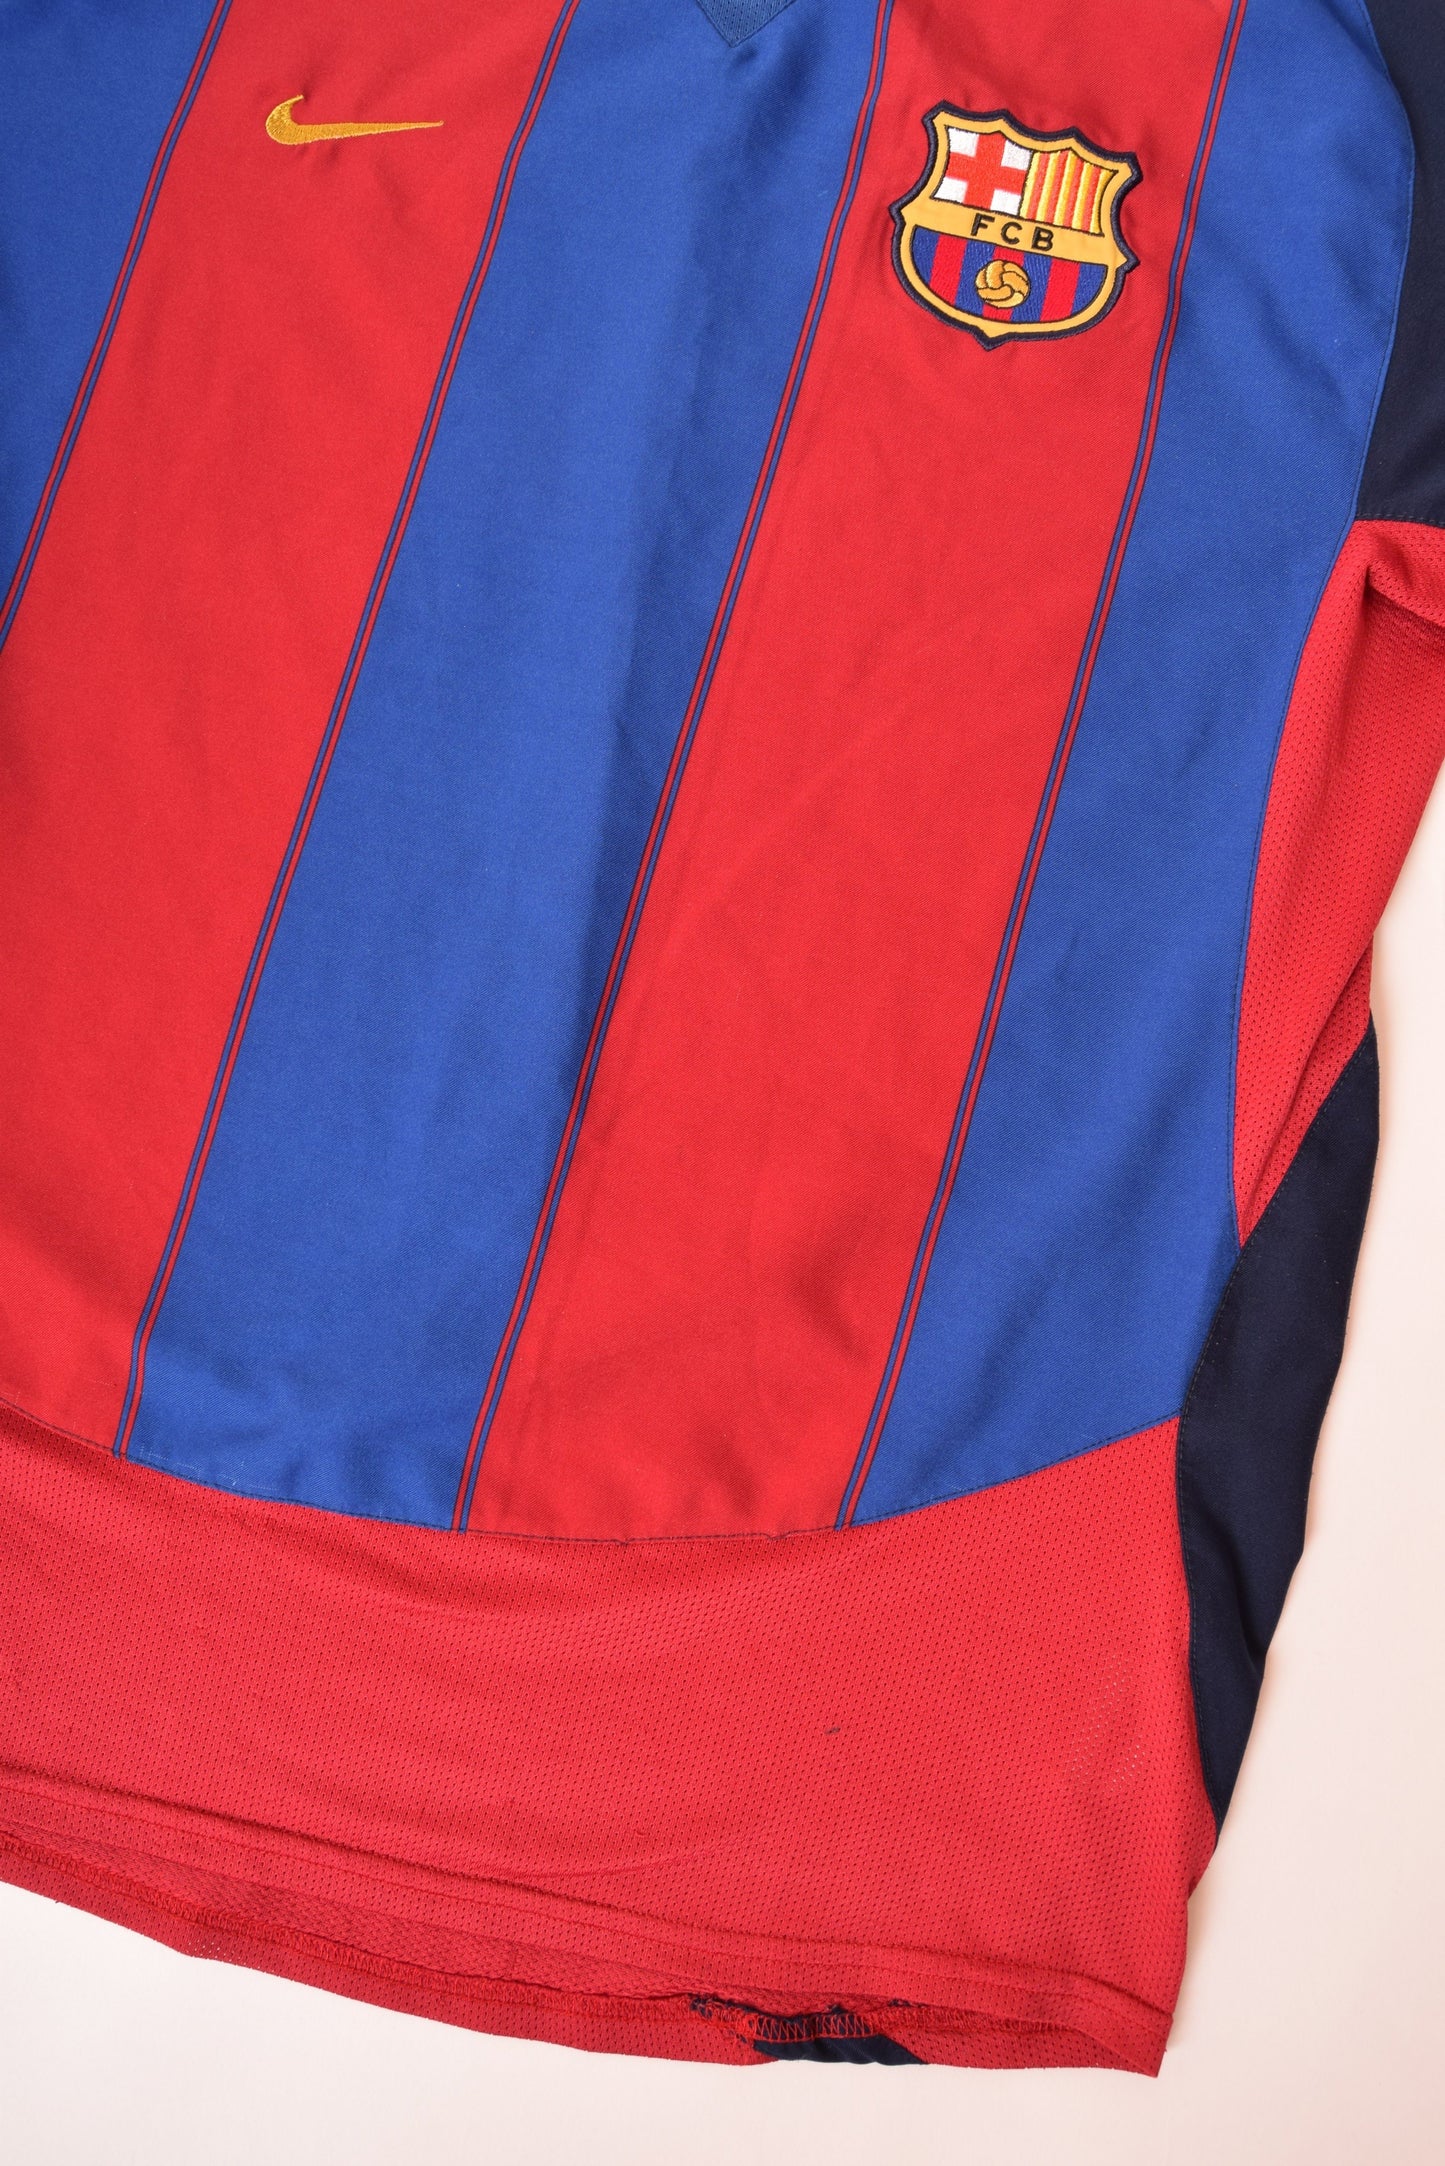 Barcelona Nike 2003-2004 Home Football Shirt Size XL Red Blue